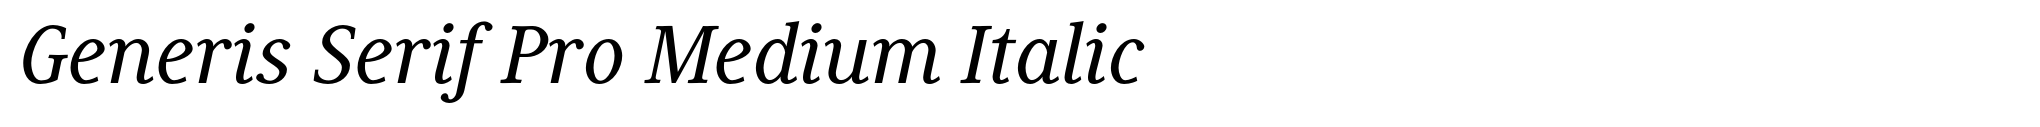 Generis Serif Pro Medium Italic image